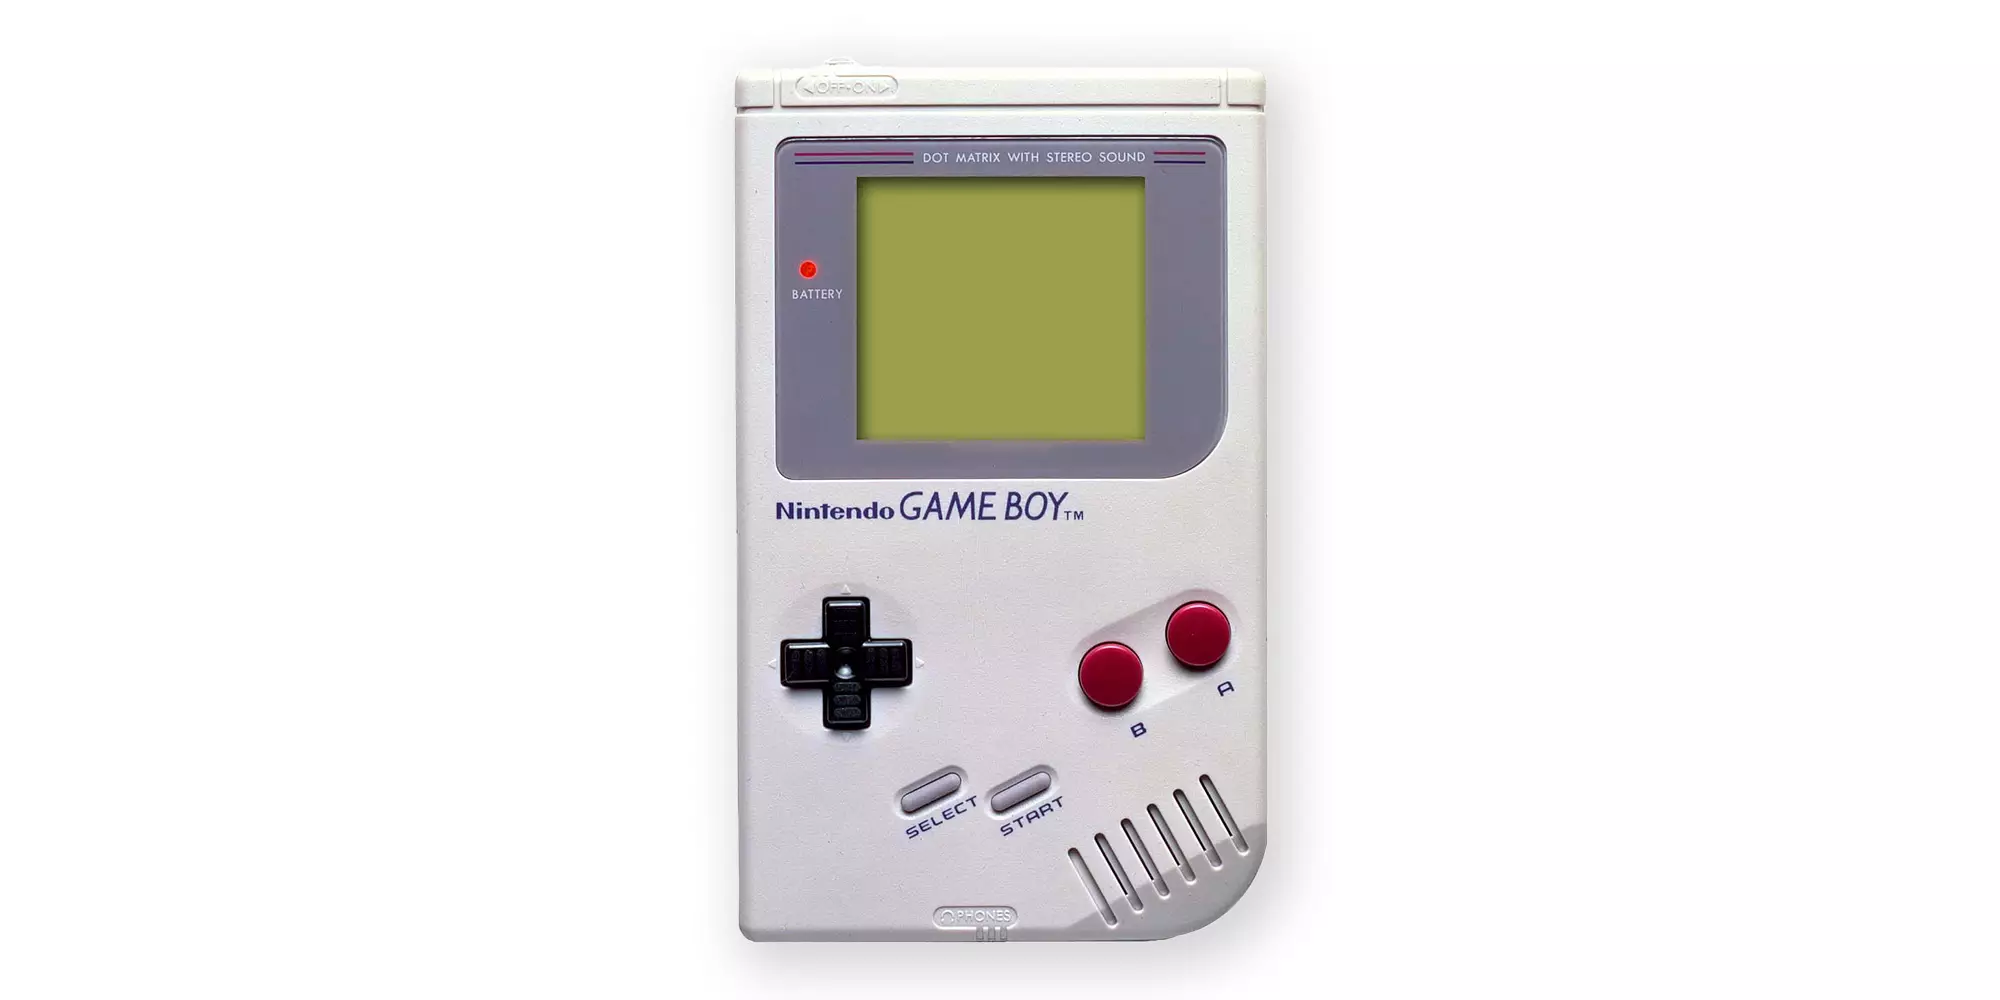 Nintendo Game Boy / credit: Nintendo